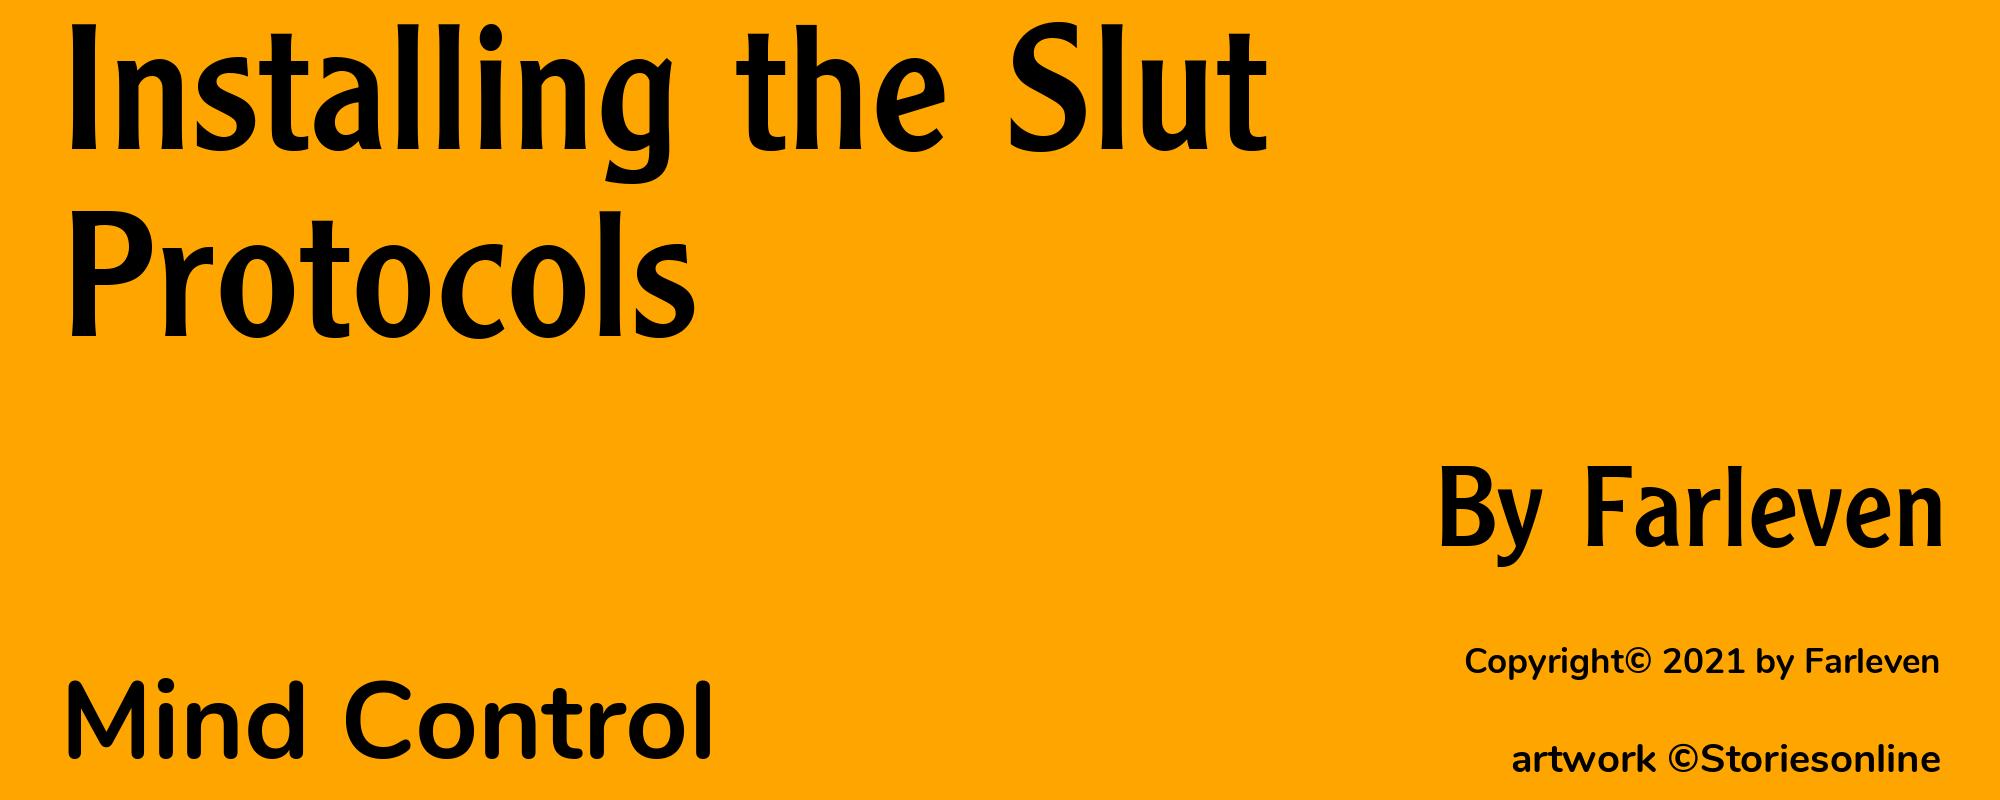 Installing the Slut Protocols - Cover